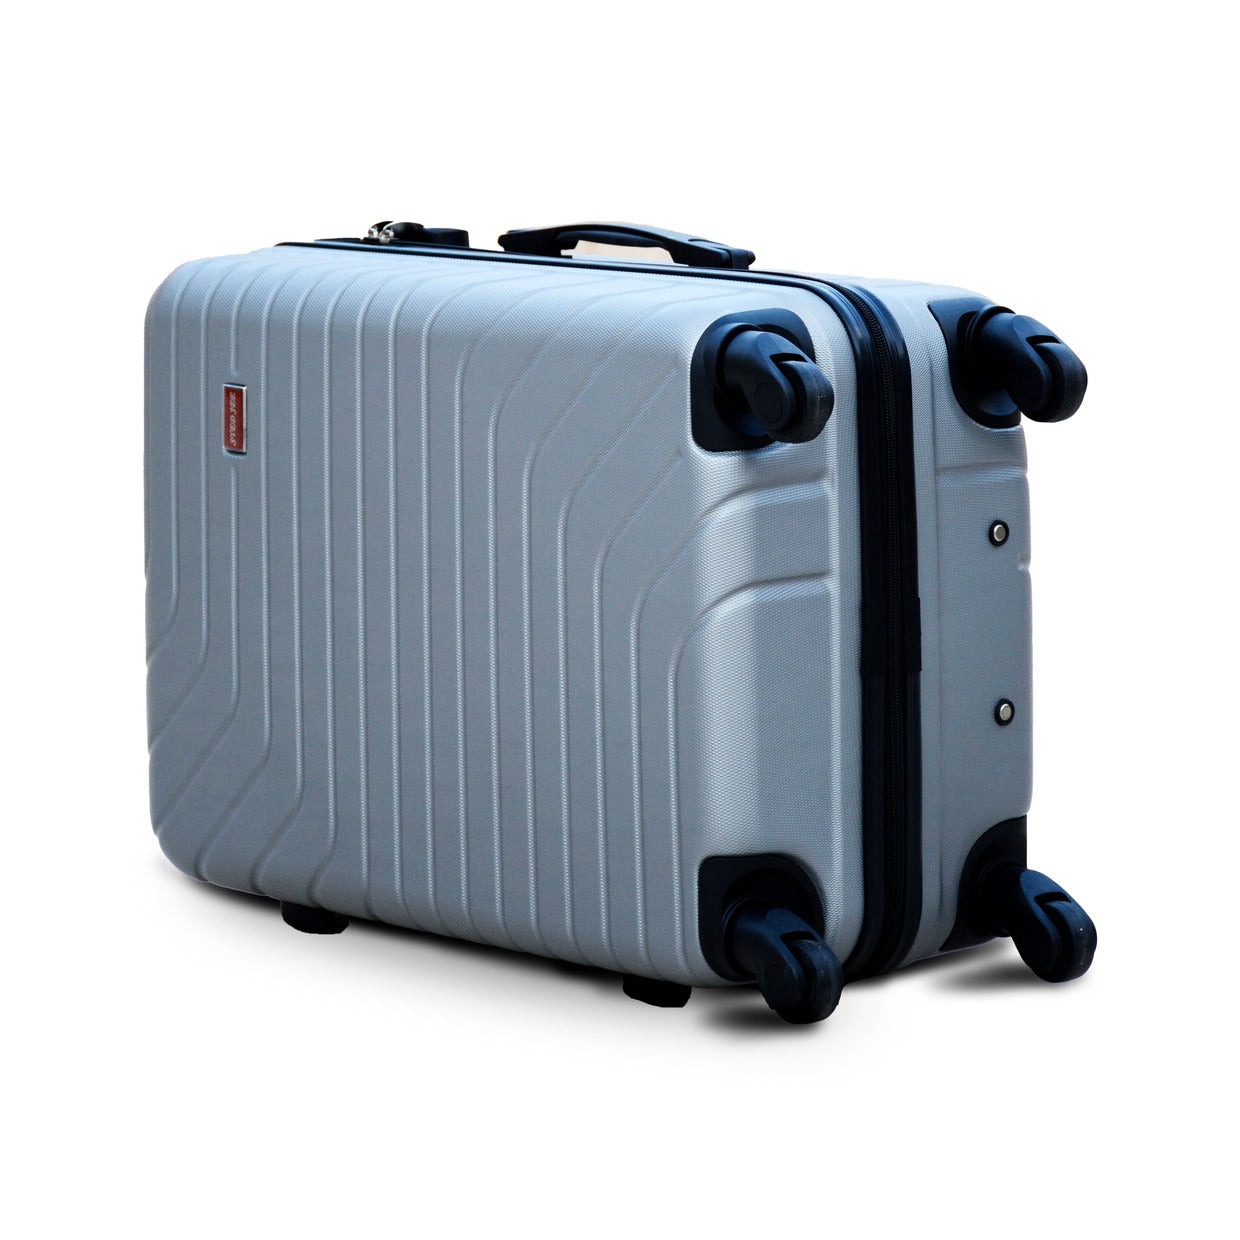 3 Pcs Set Grey Colour SJ ABS Travel Luggage Lightweight Hard case Trolley Bag